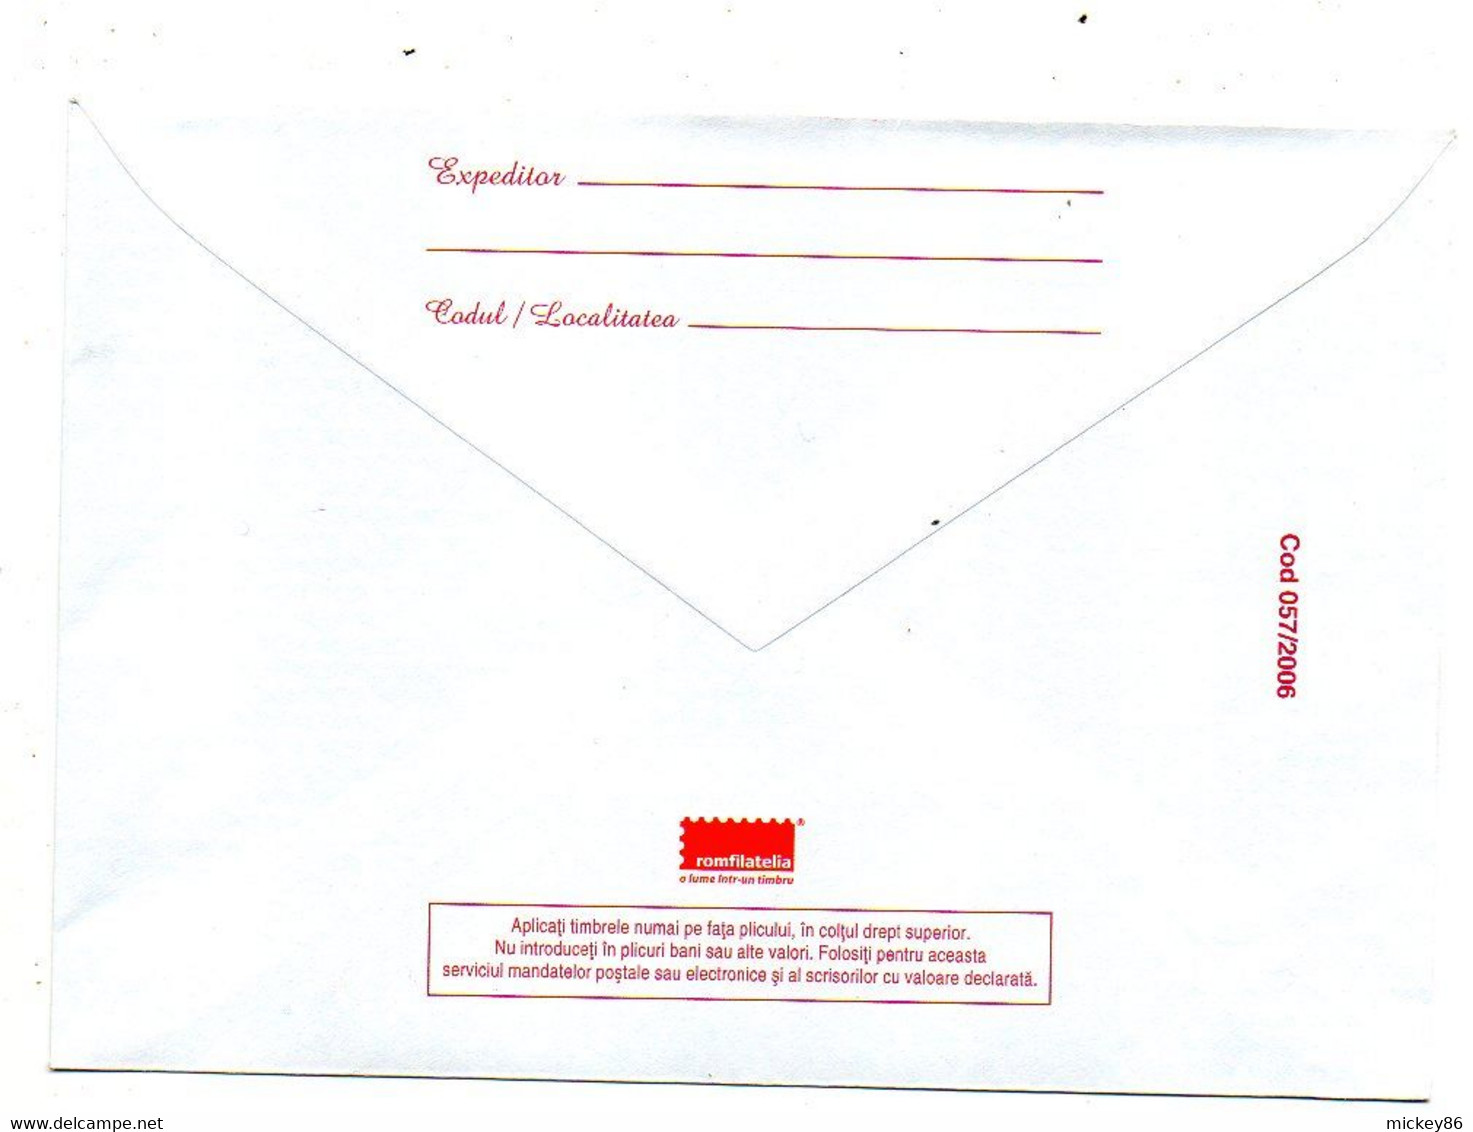 ROUMANIE----Entier Postal  Enveloppe NEUF ...--Ulcior De Nunta ..........à Saisir - Ganzsachen